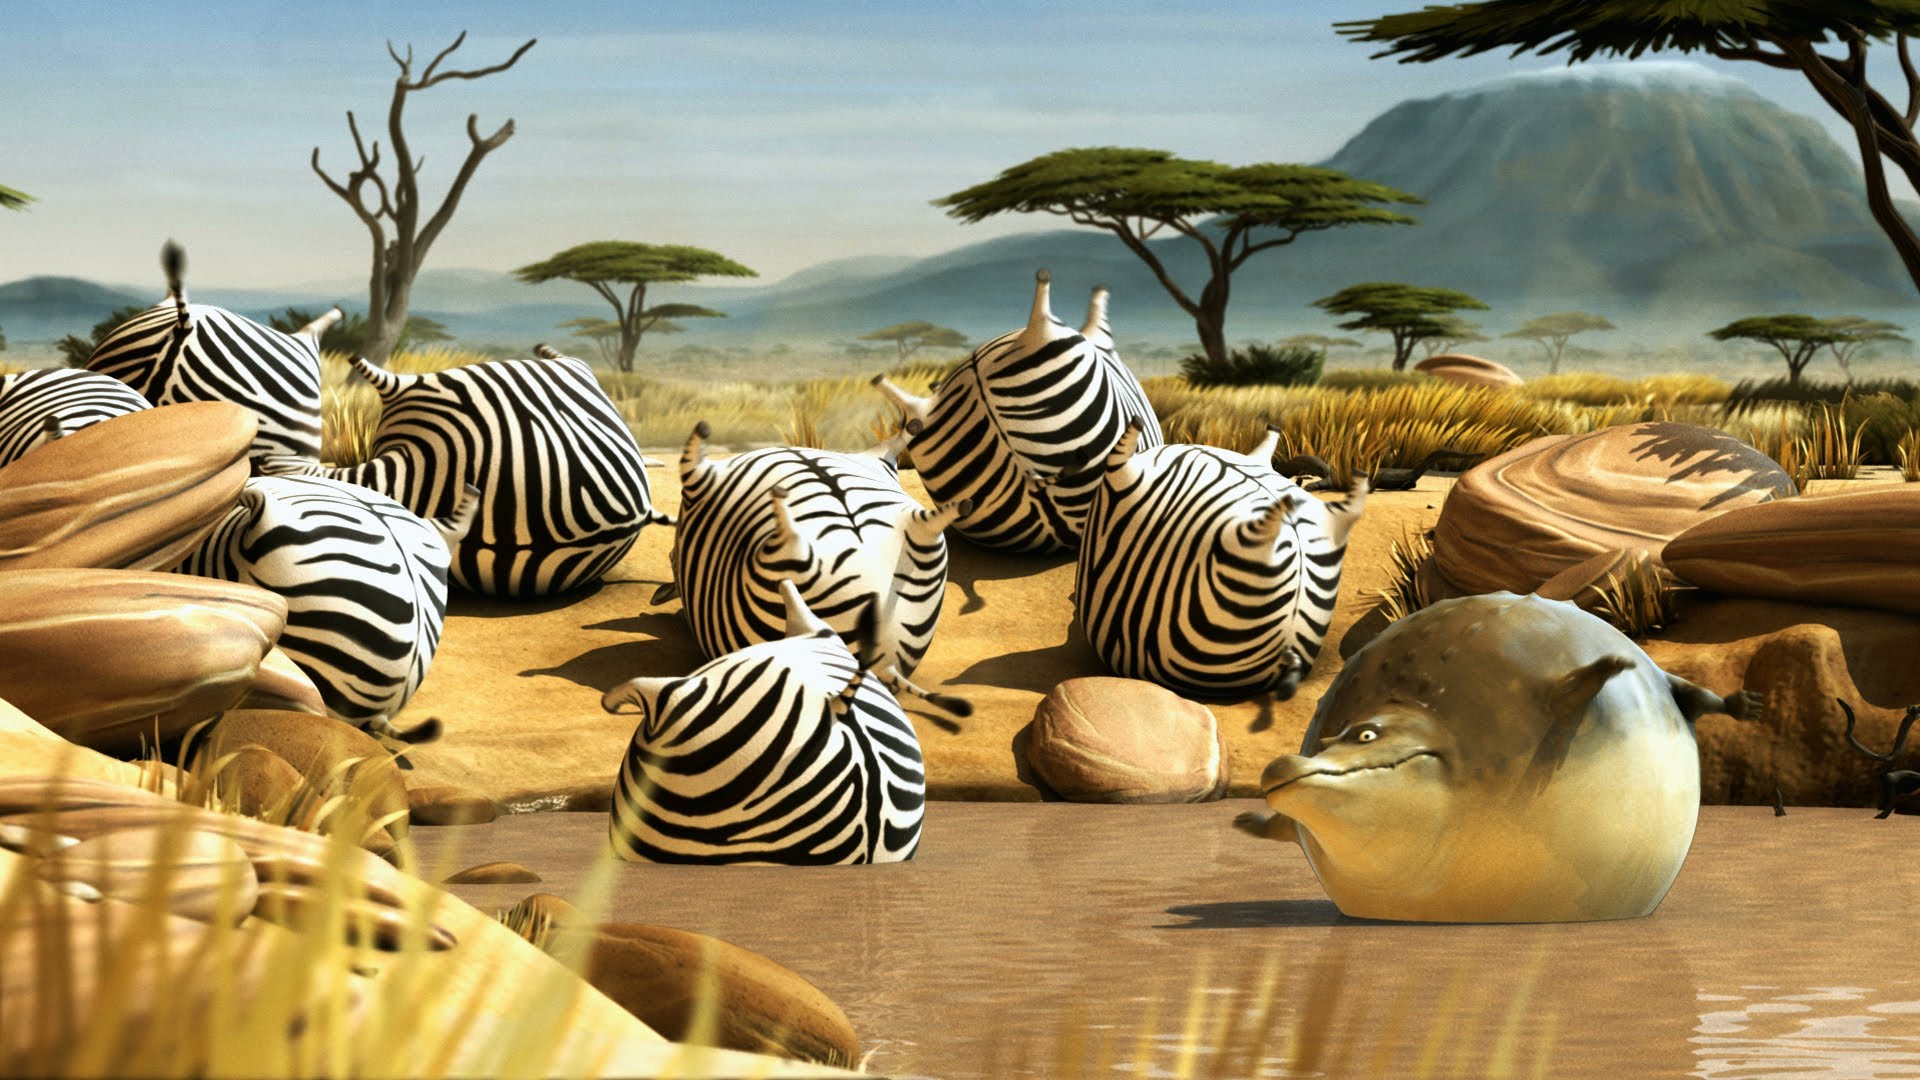 Kyra & Constantin Rollin' Wild (Zebras) - YouTube